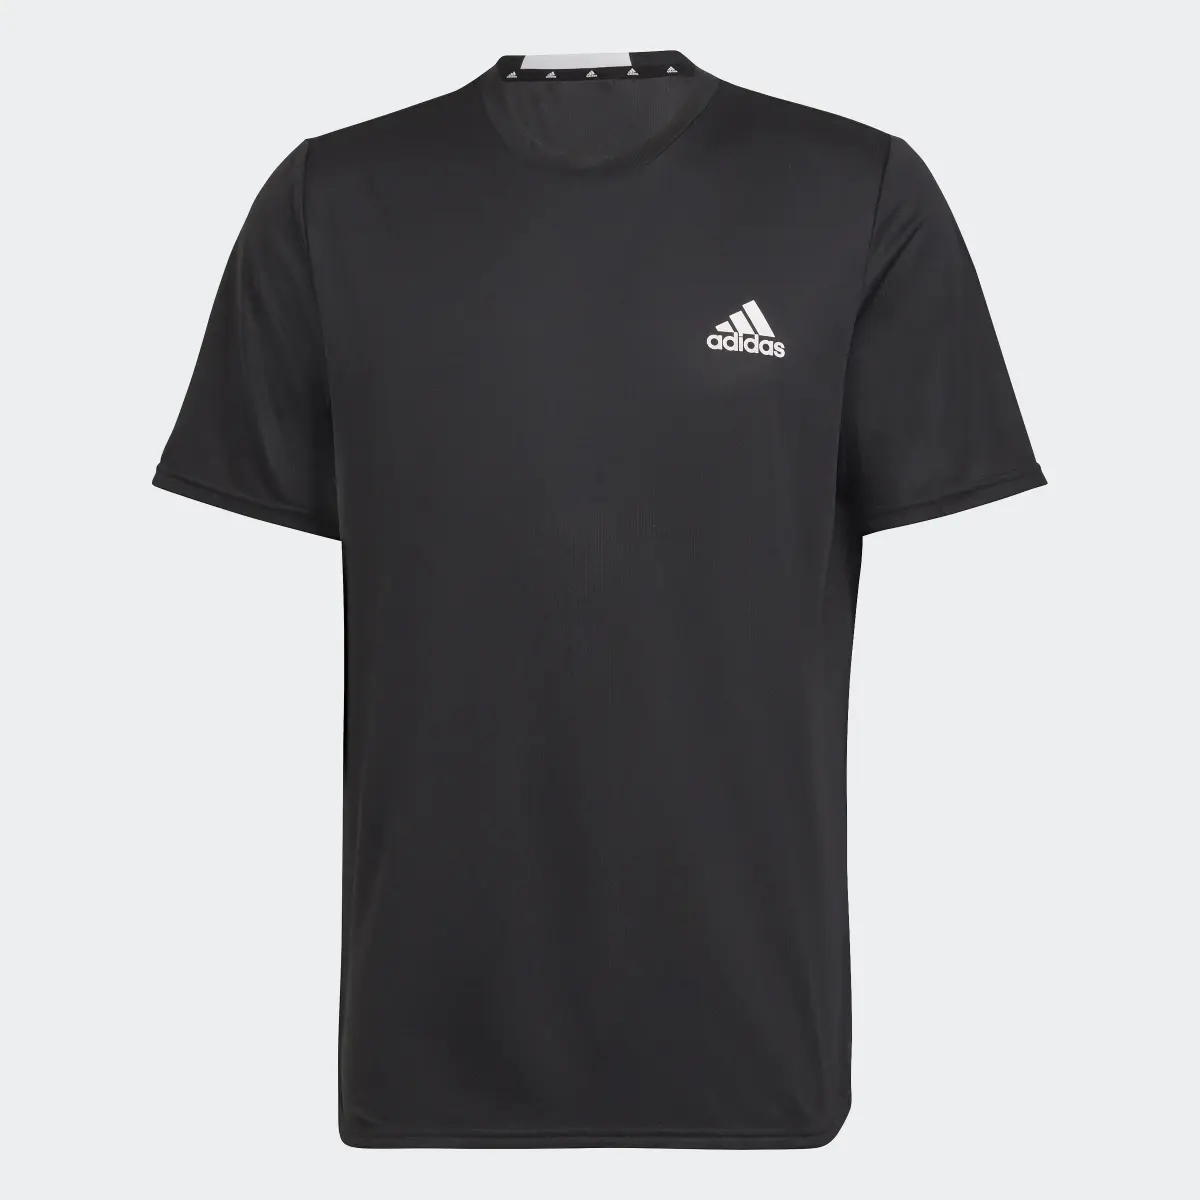 Adidas AEROREADY Designed for Movement T-Shirt. 1